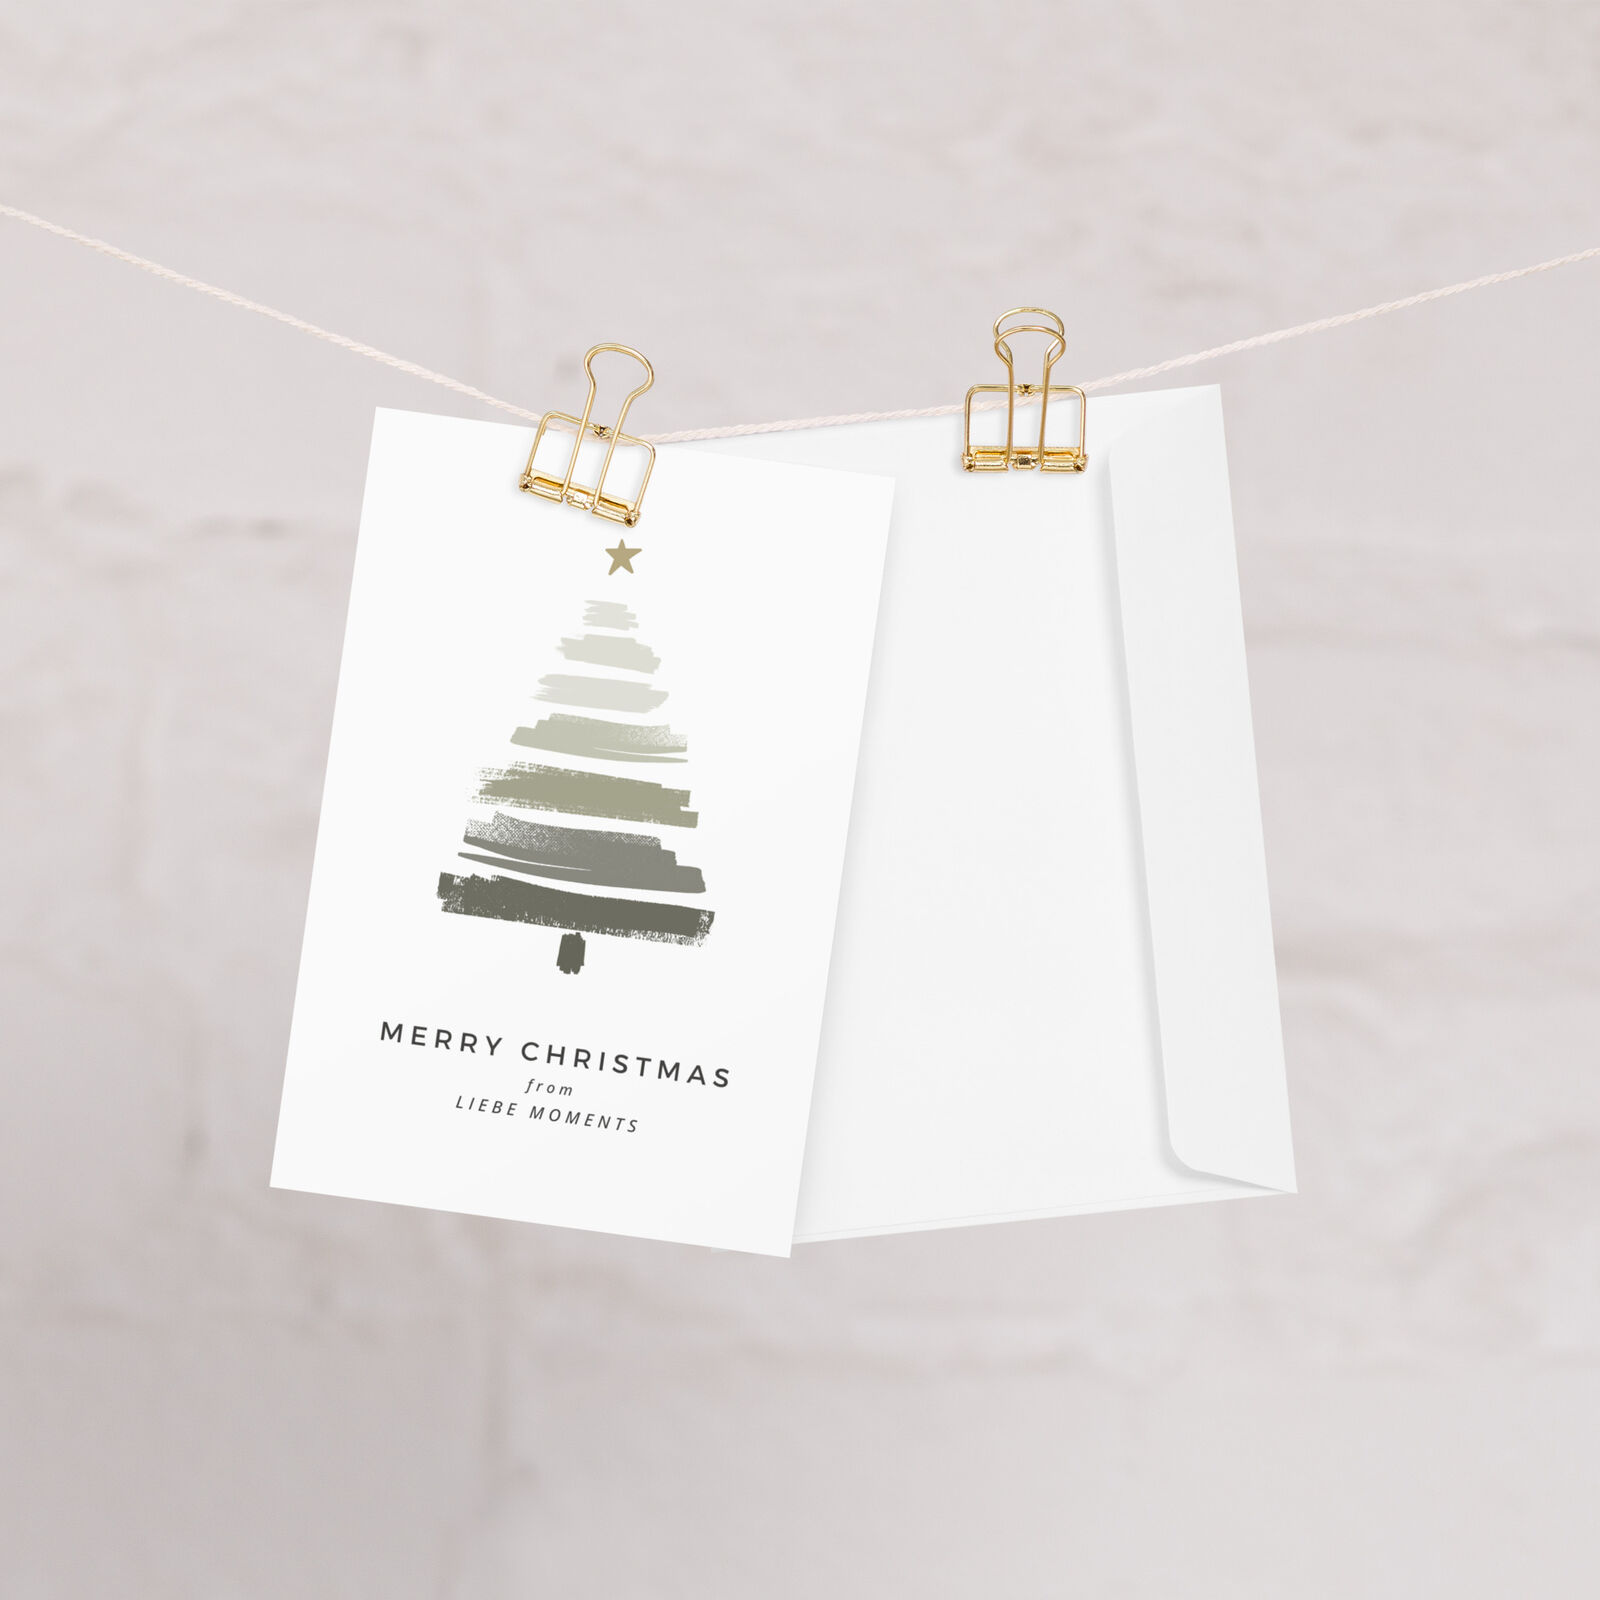 Green Tree Holiday Christmas Card Greeting Xmas Collectible Paper Cards Greeting